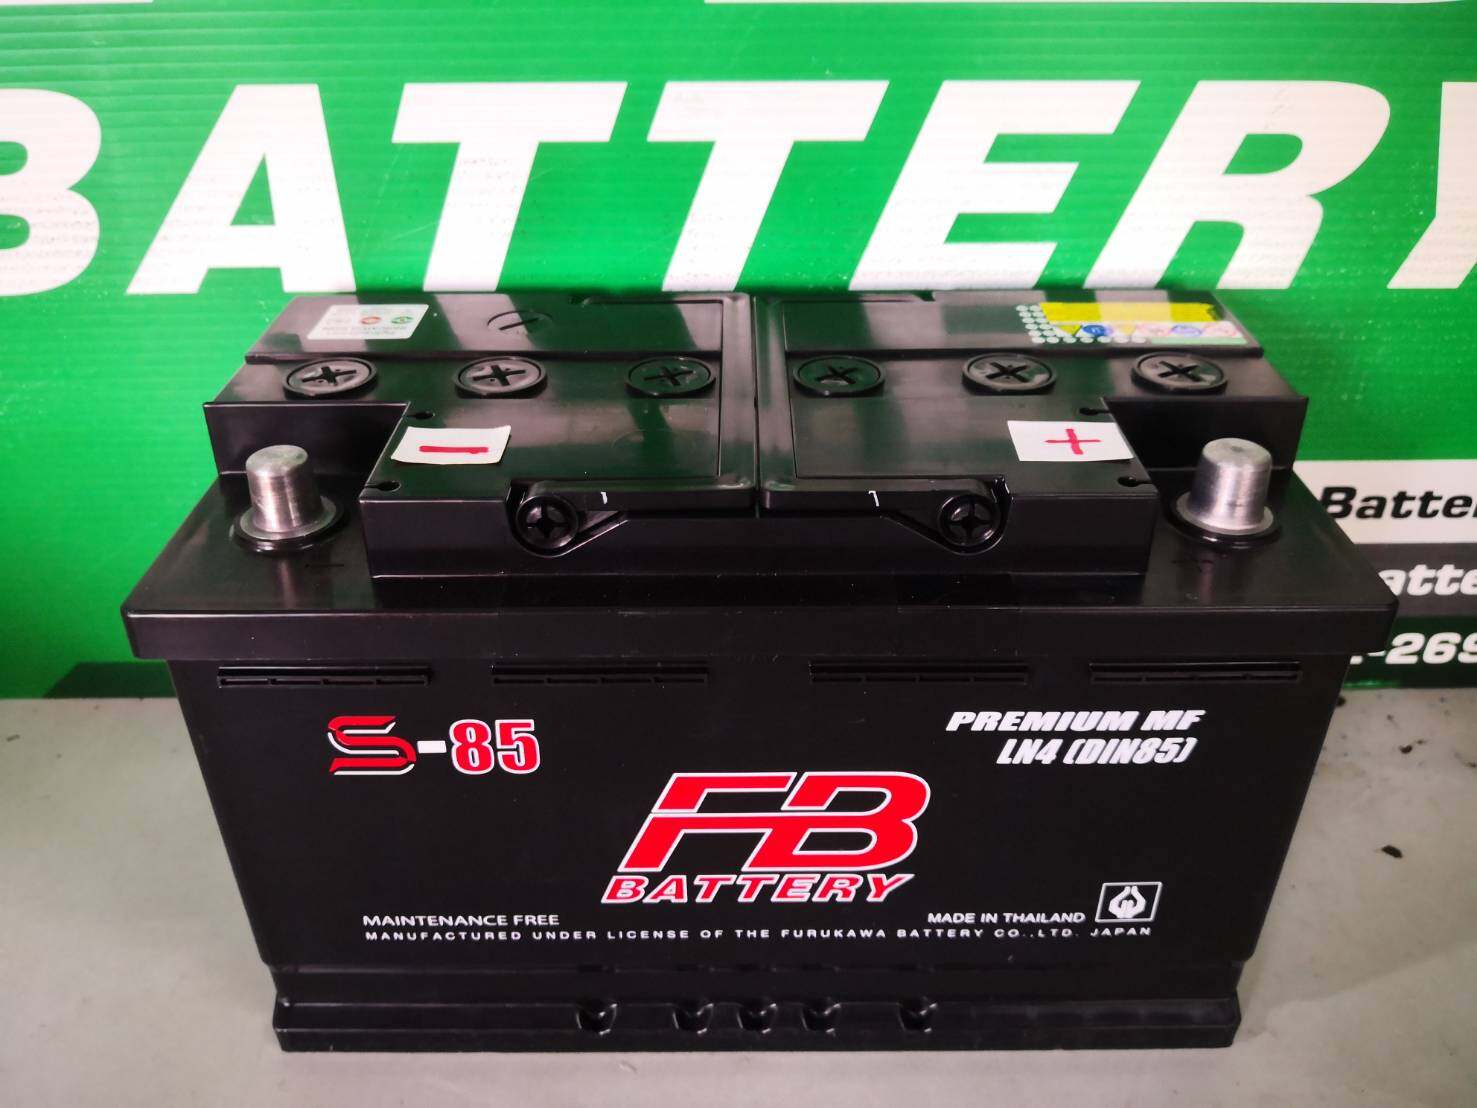 FB แบตเตอรี่ รถยนต์ REVO แบบขั้วต่ำ รุ่น S-85 DIN85 LN4 ขั้ว L ซ้าย ไฟ12V85A แกะกล่องใช้ได้เลย เป็นแบตระบบกึ่งแห้ง รับประกันโดย Siam Battery